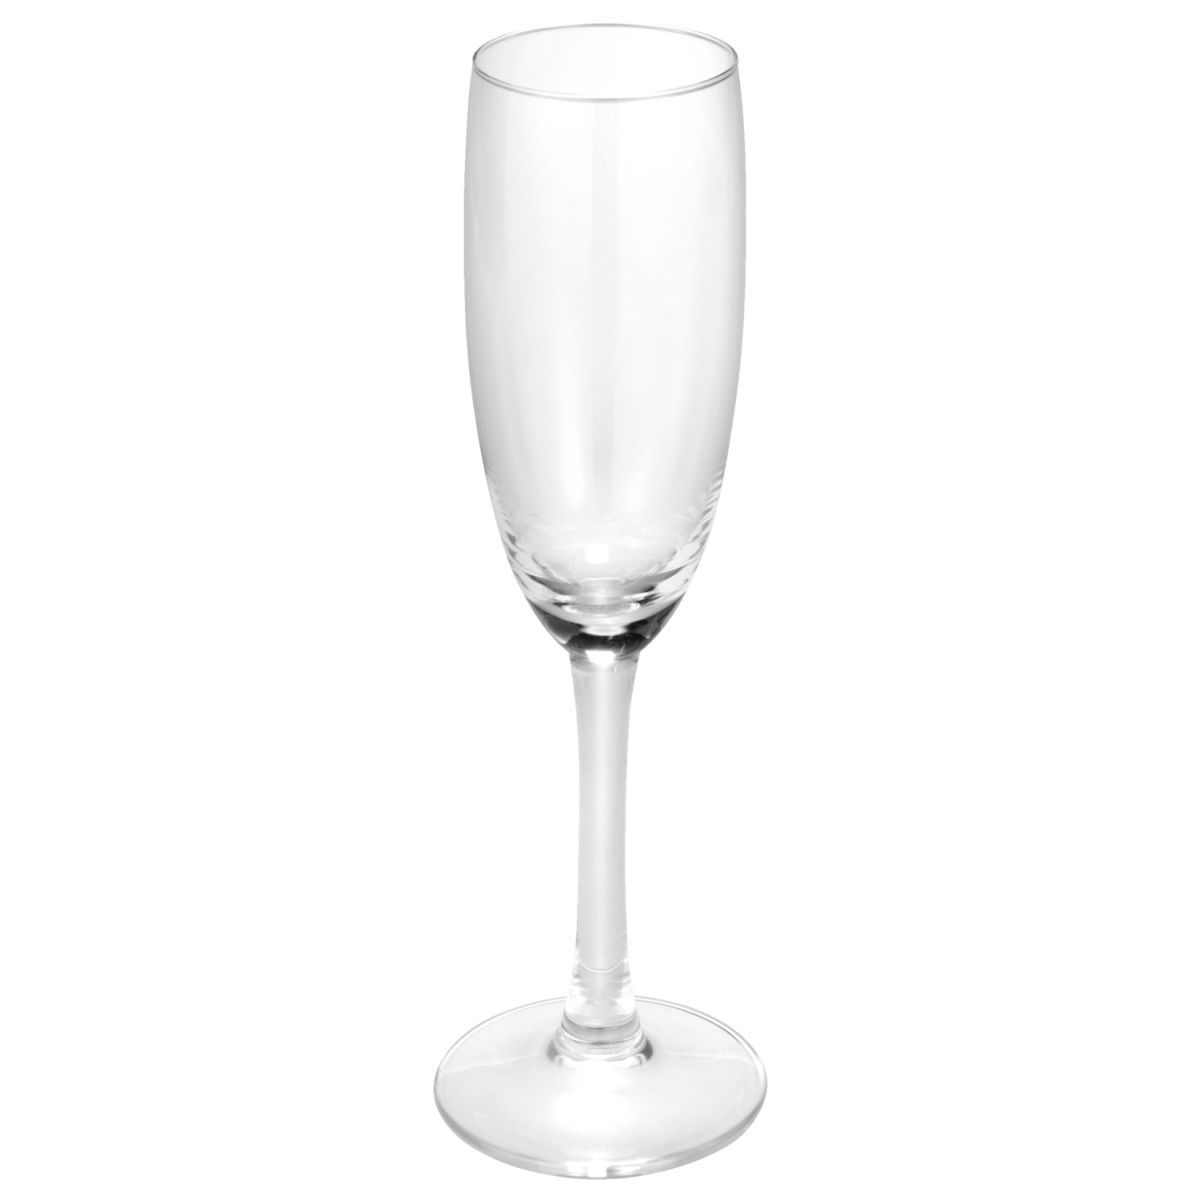 Royal leerdam Champagneglas Claret; 170ml, 5x19.2 cm (ØxH); transparant; 12 stuk / verpakking